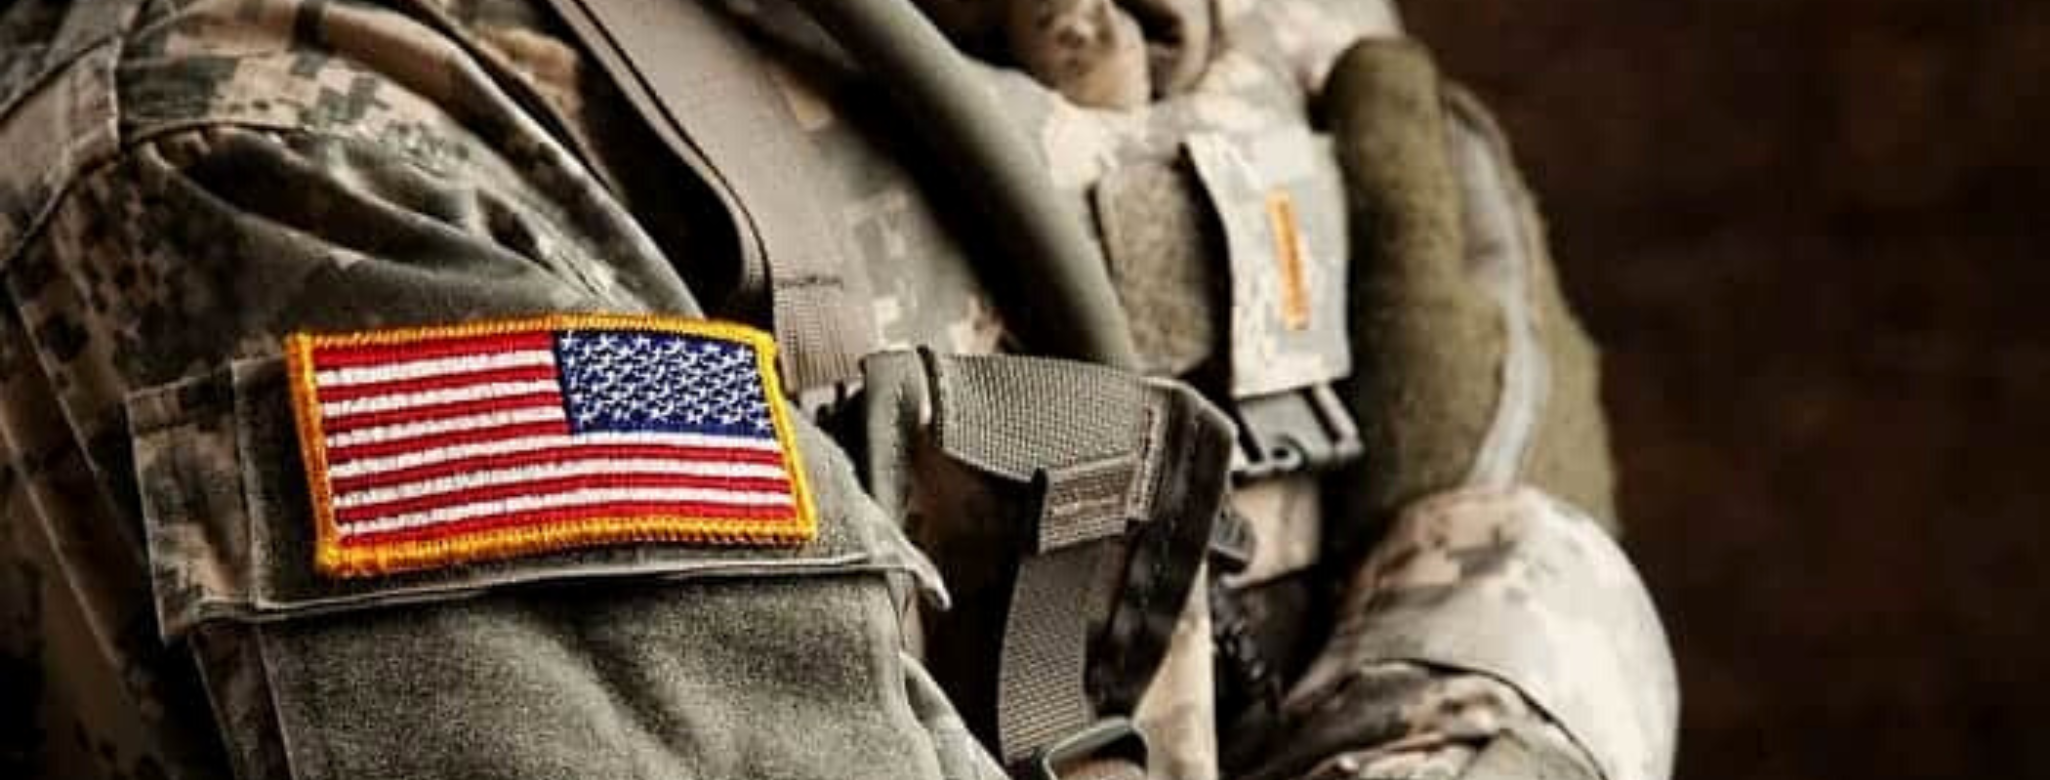 army uniform patches placement